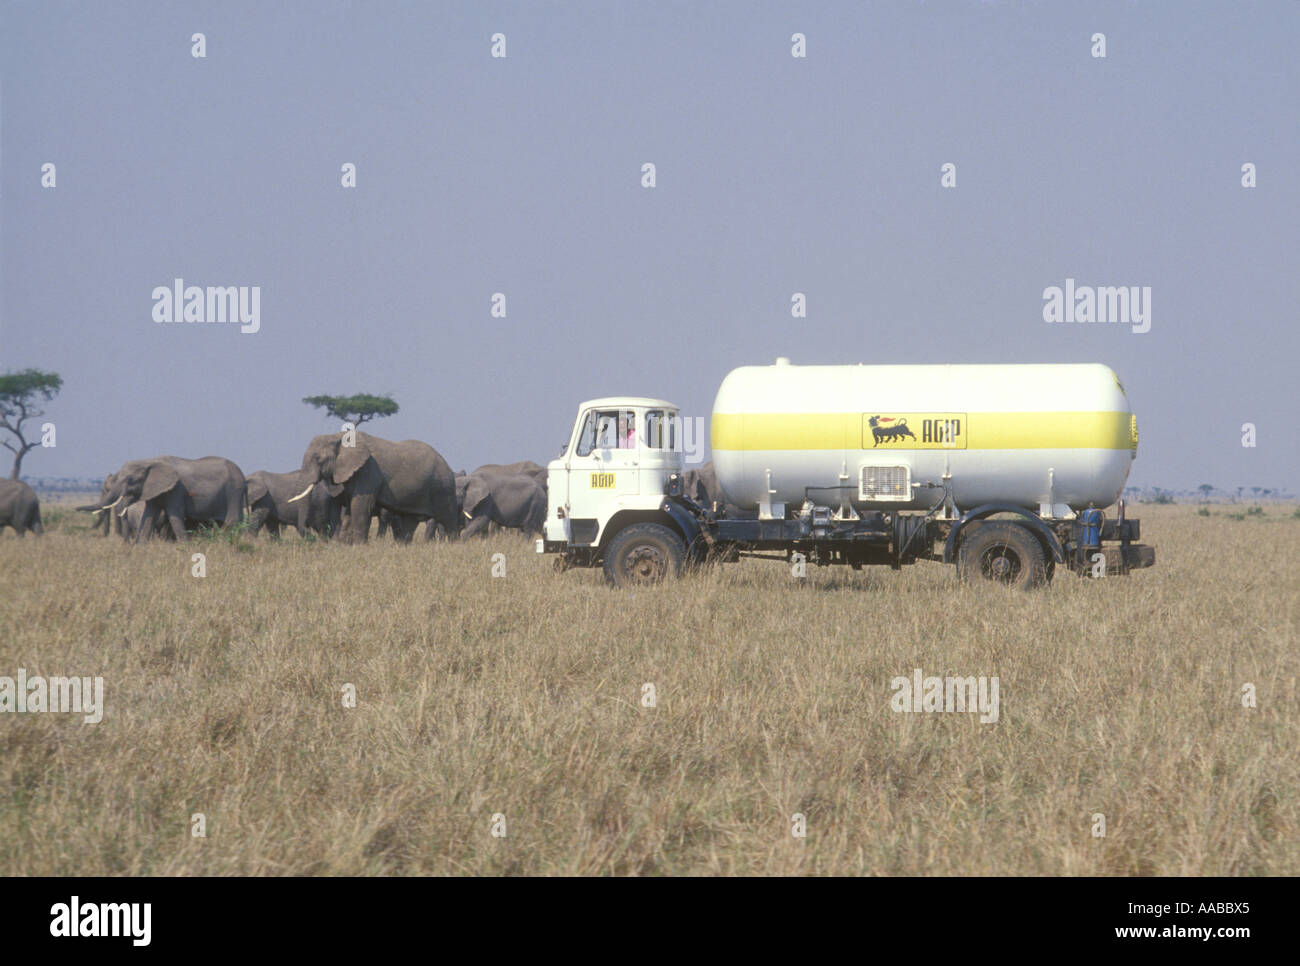 Elephant vicino al gas Agip Tanker Masai Mara riserva nazionale del Kenya Africa orientale Foto Stock